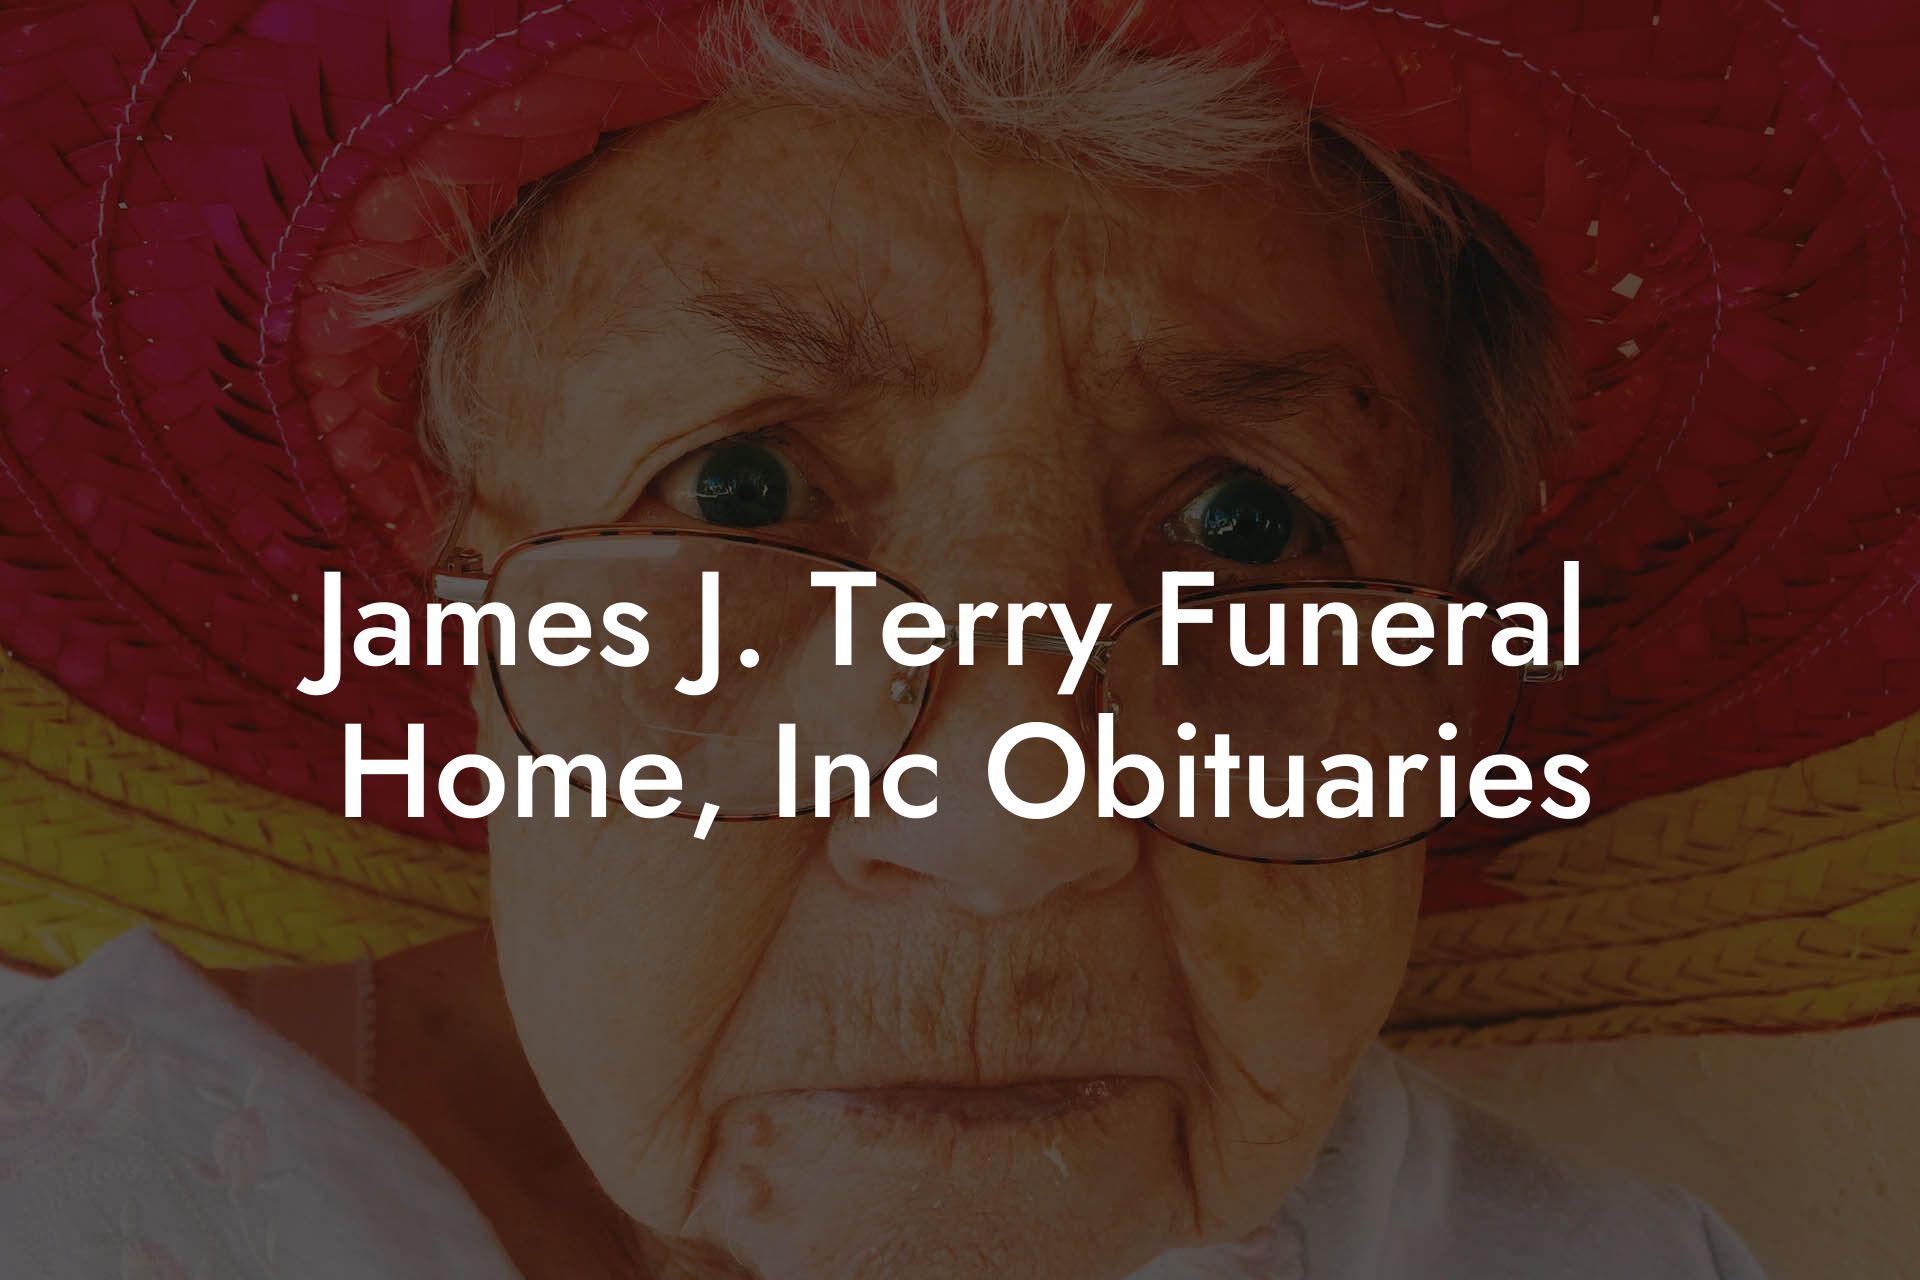 James J. Terry Funeral Home, Inc Obituaries